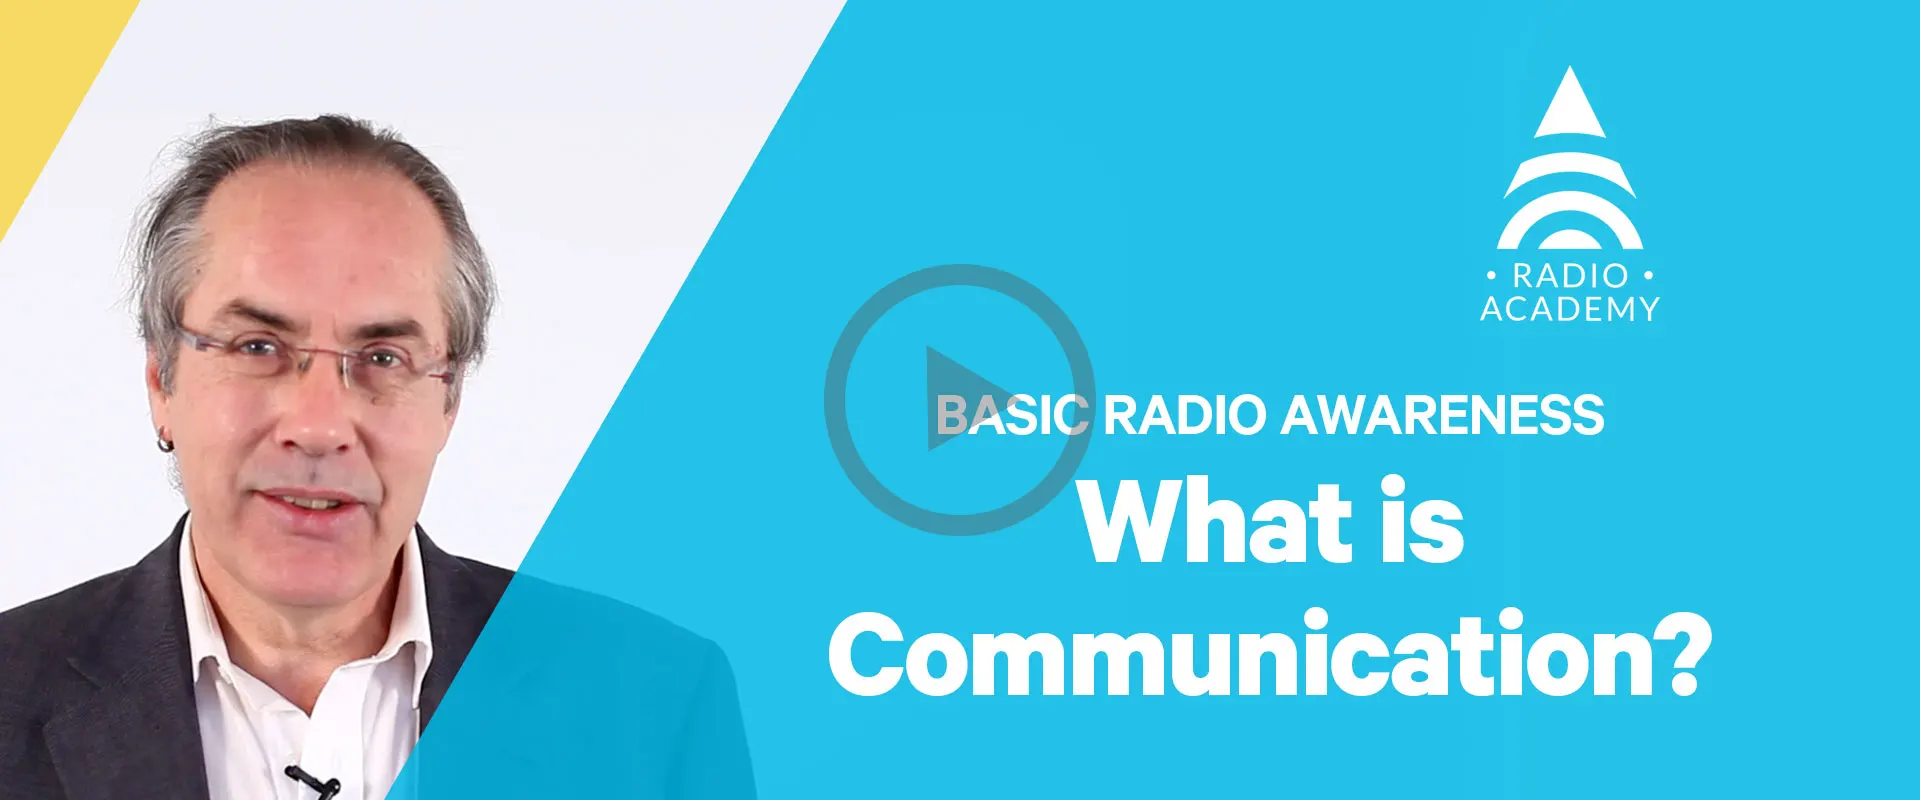 Radio-academy-what-is-communication-1920x800